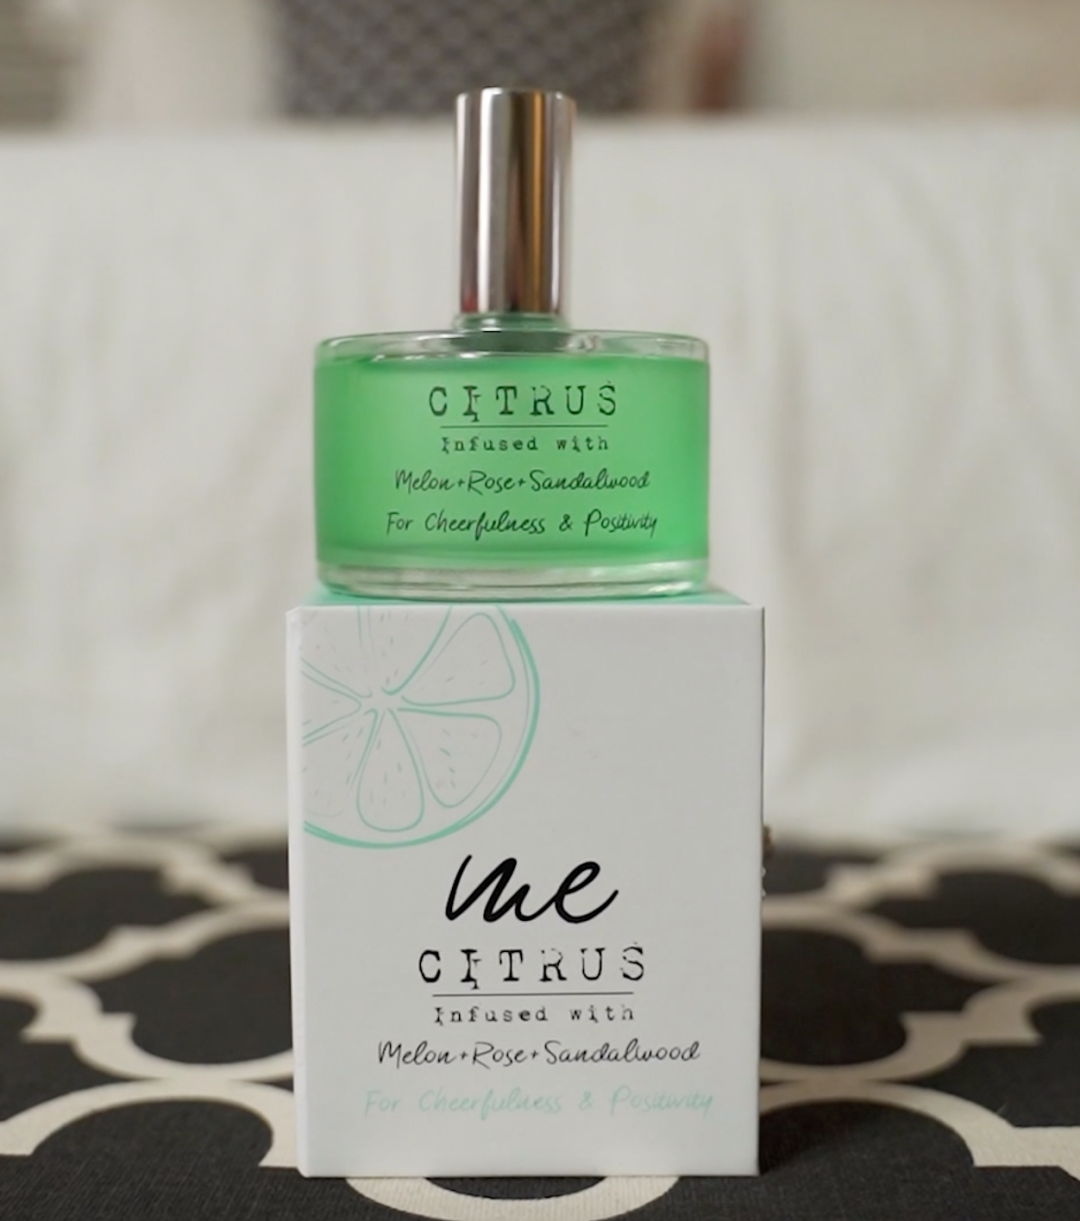 A bottle of citrus scent perfume.